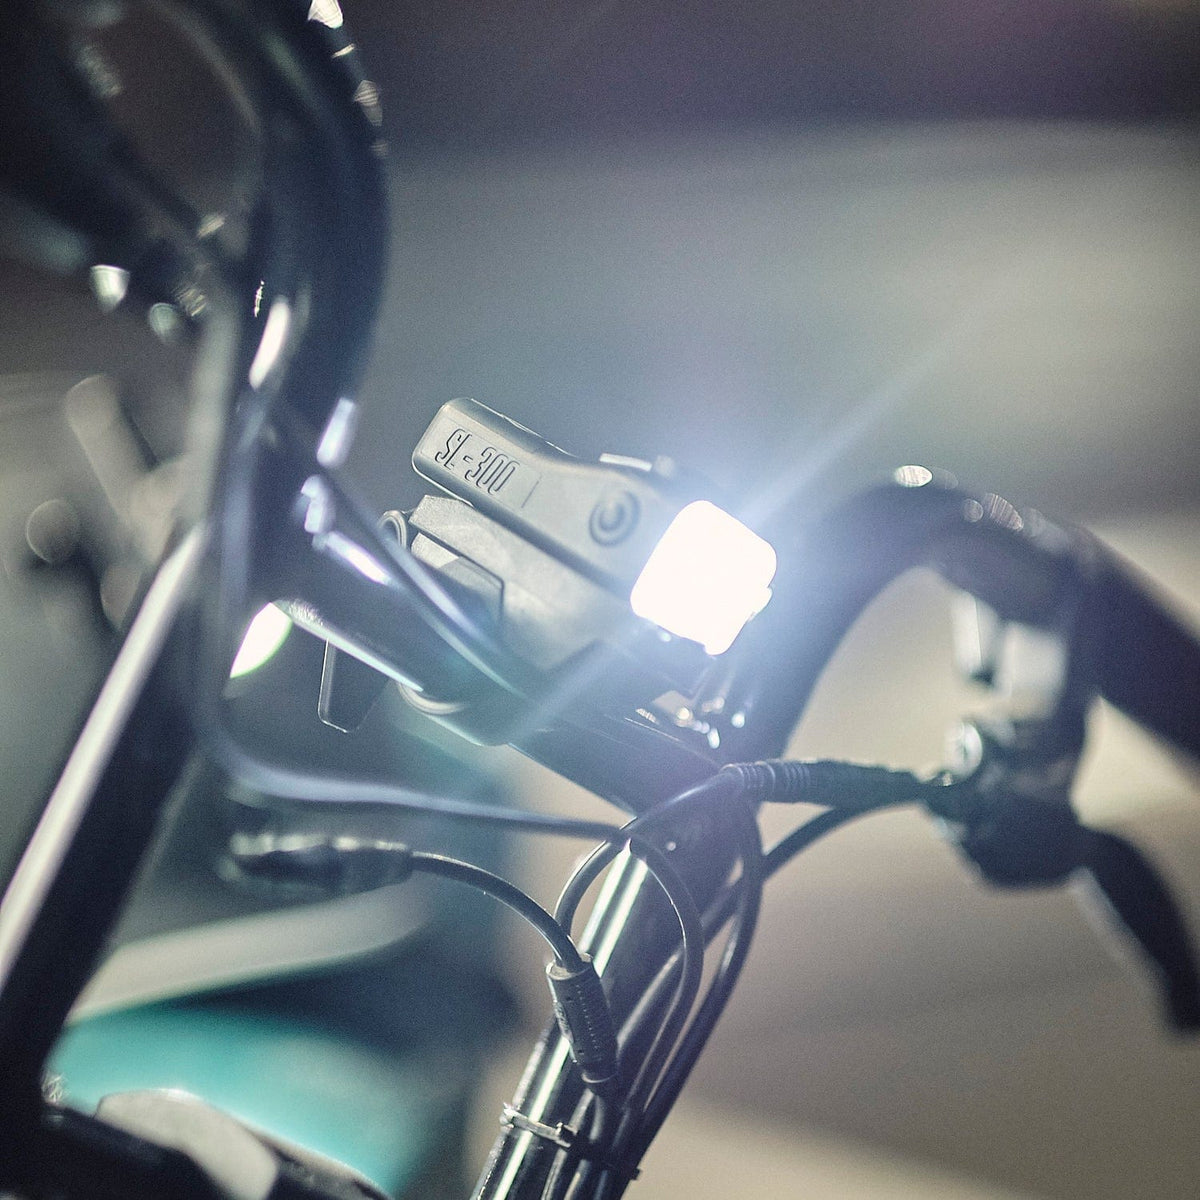 SL-300+ Headlight & SL-R1+ Brake Light Bike Bundle